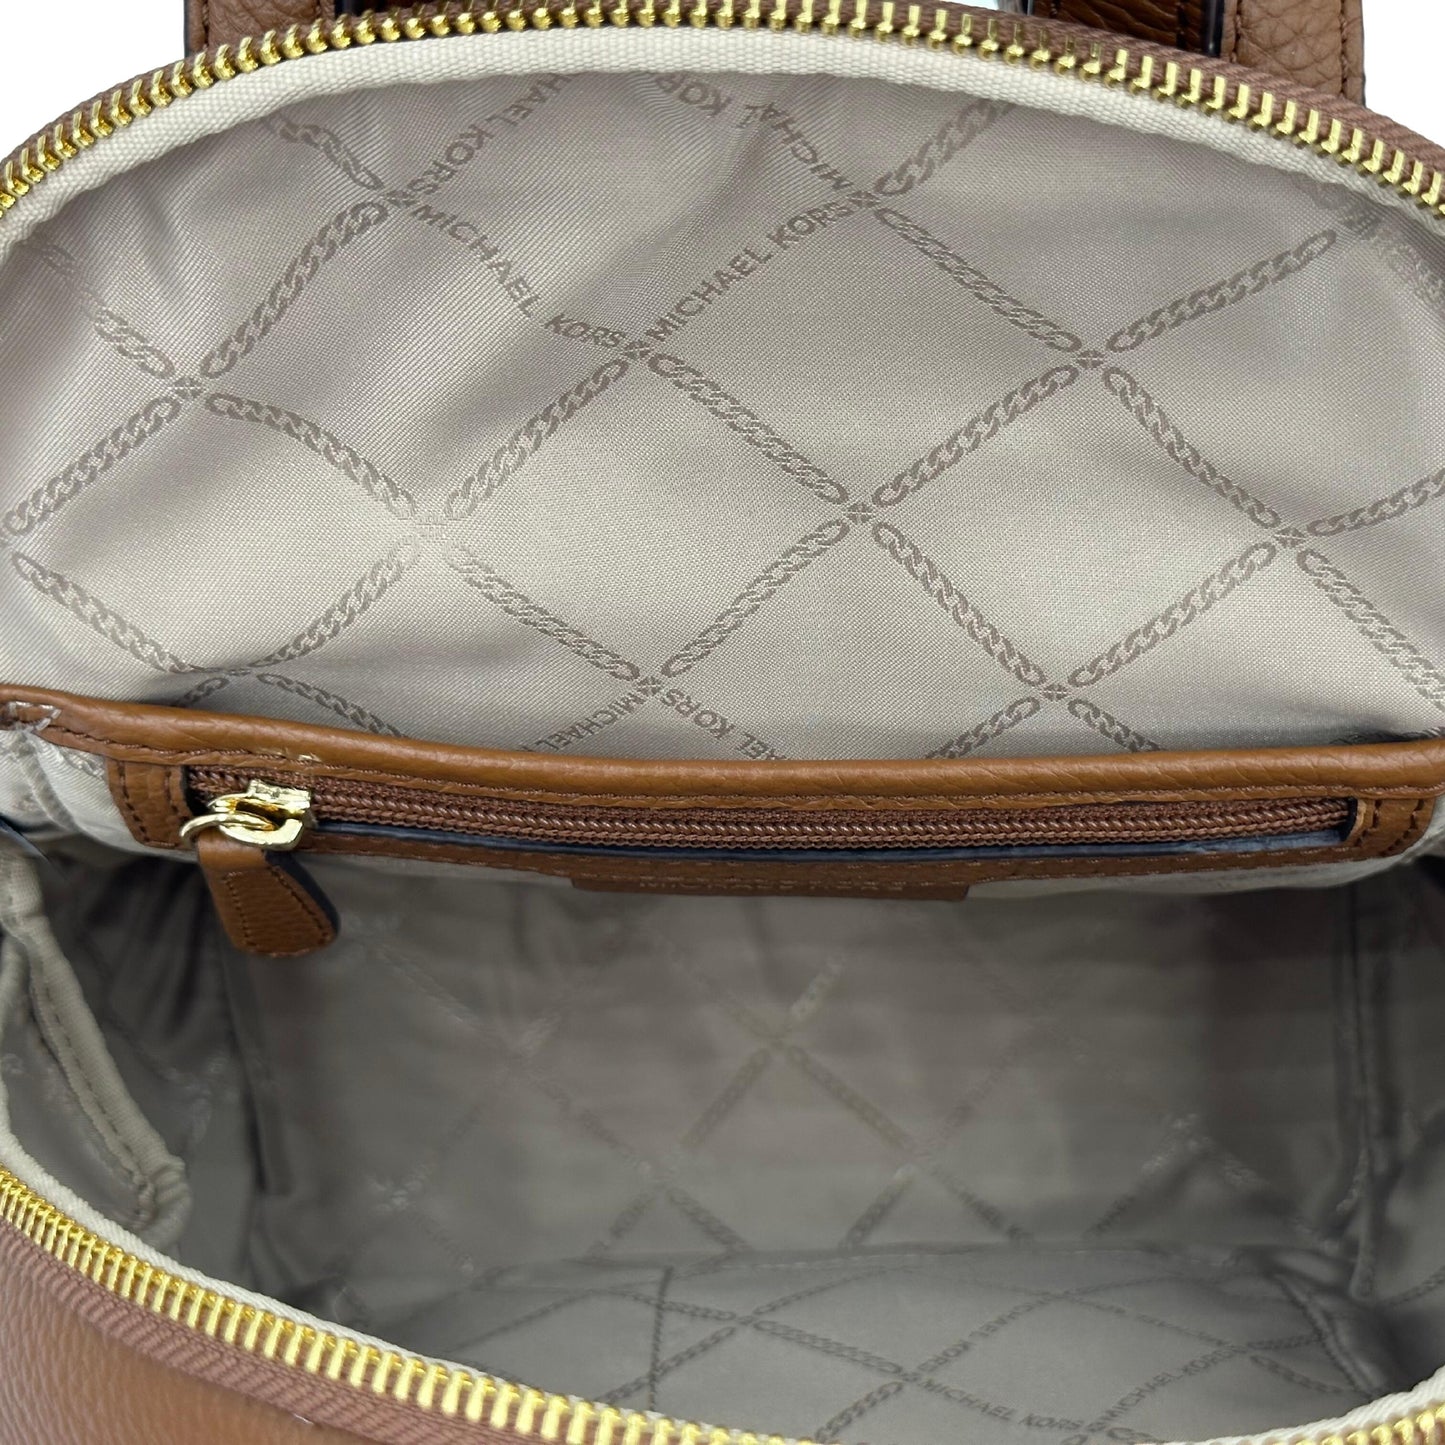 Michael Kors Erin Medium Pebbled Leather Backpack - Brown 194900722312